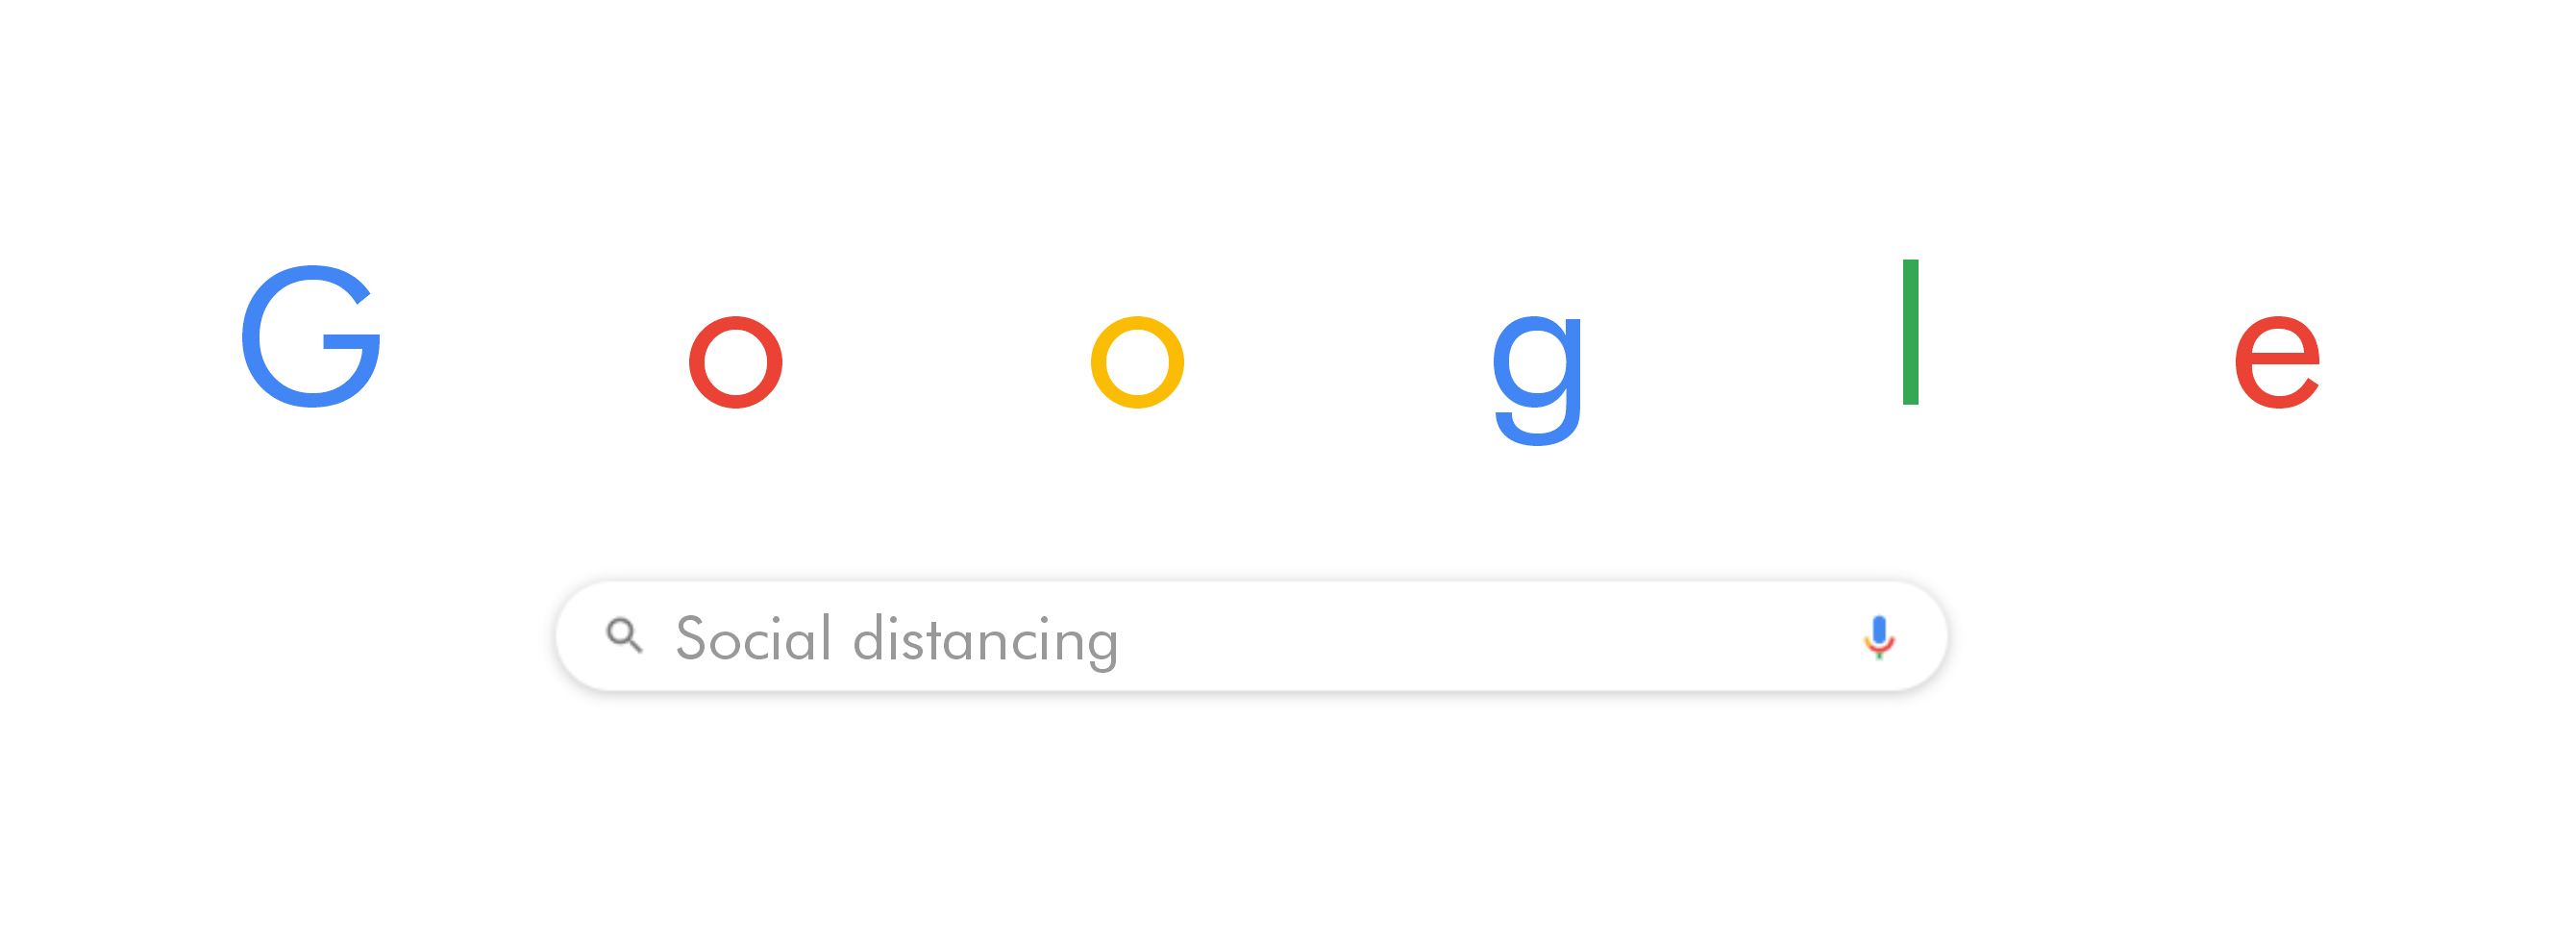 google doodle social distancing concept